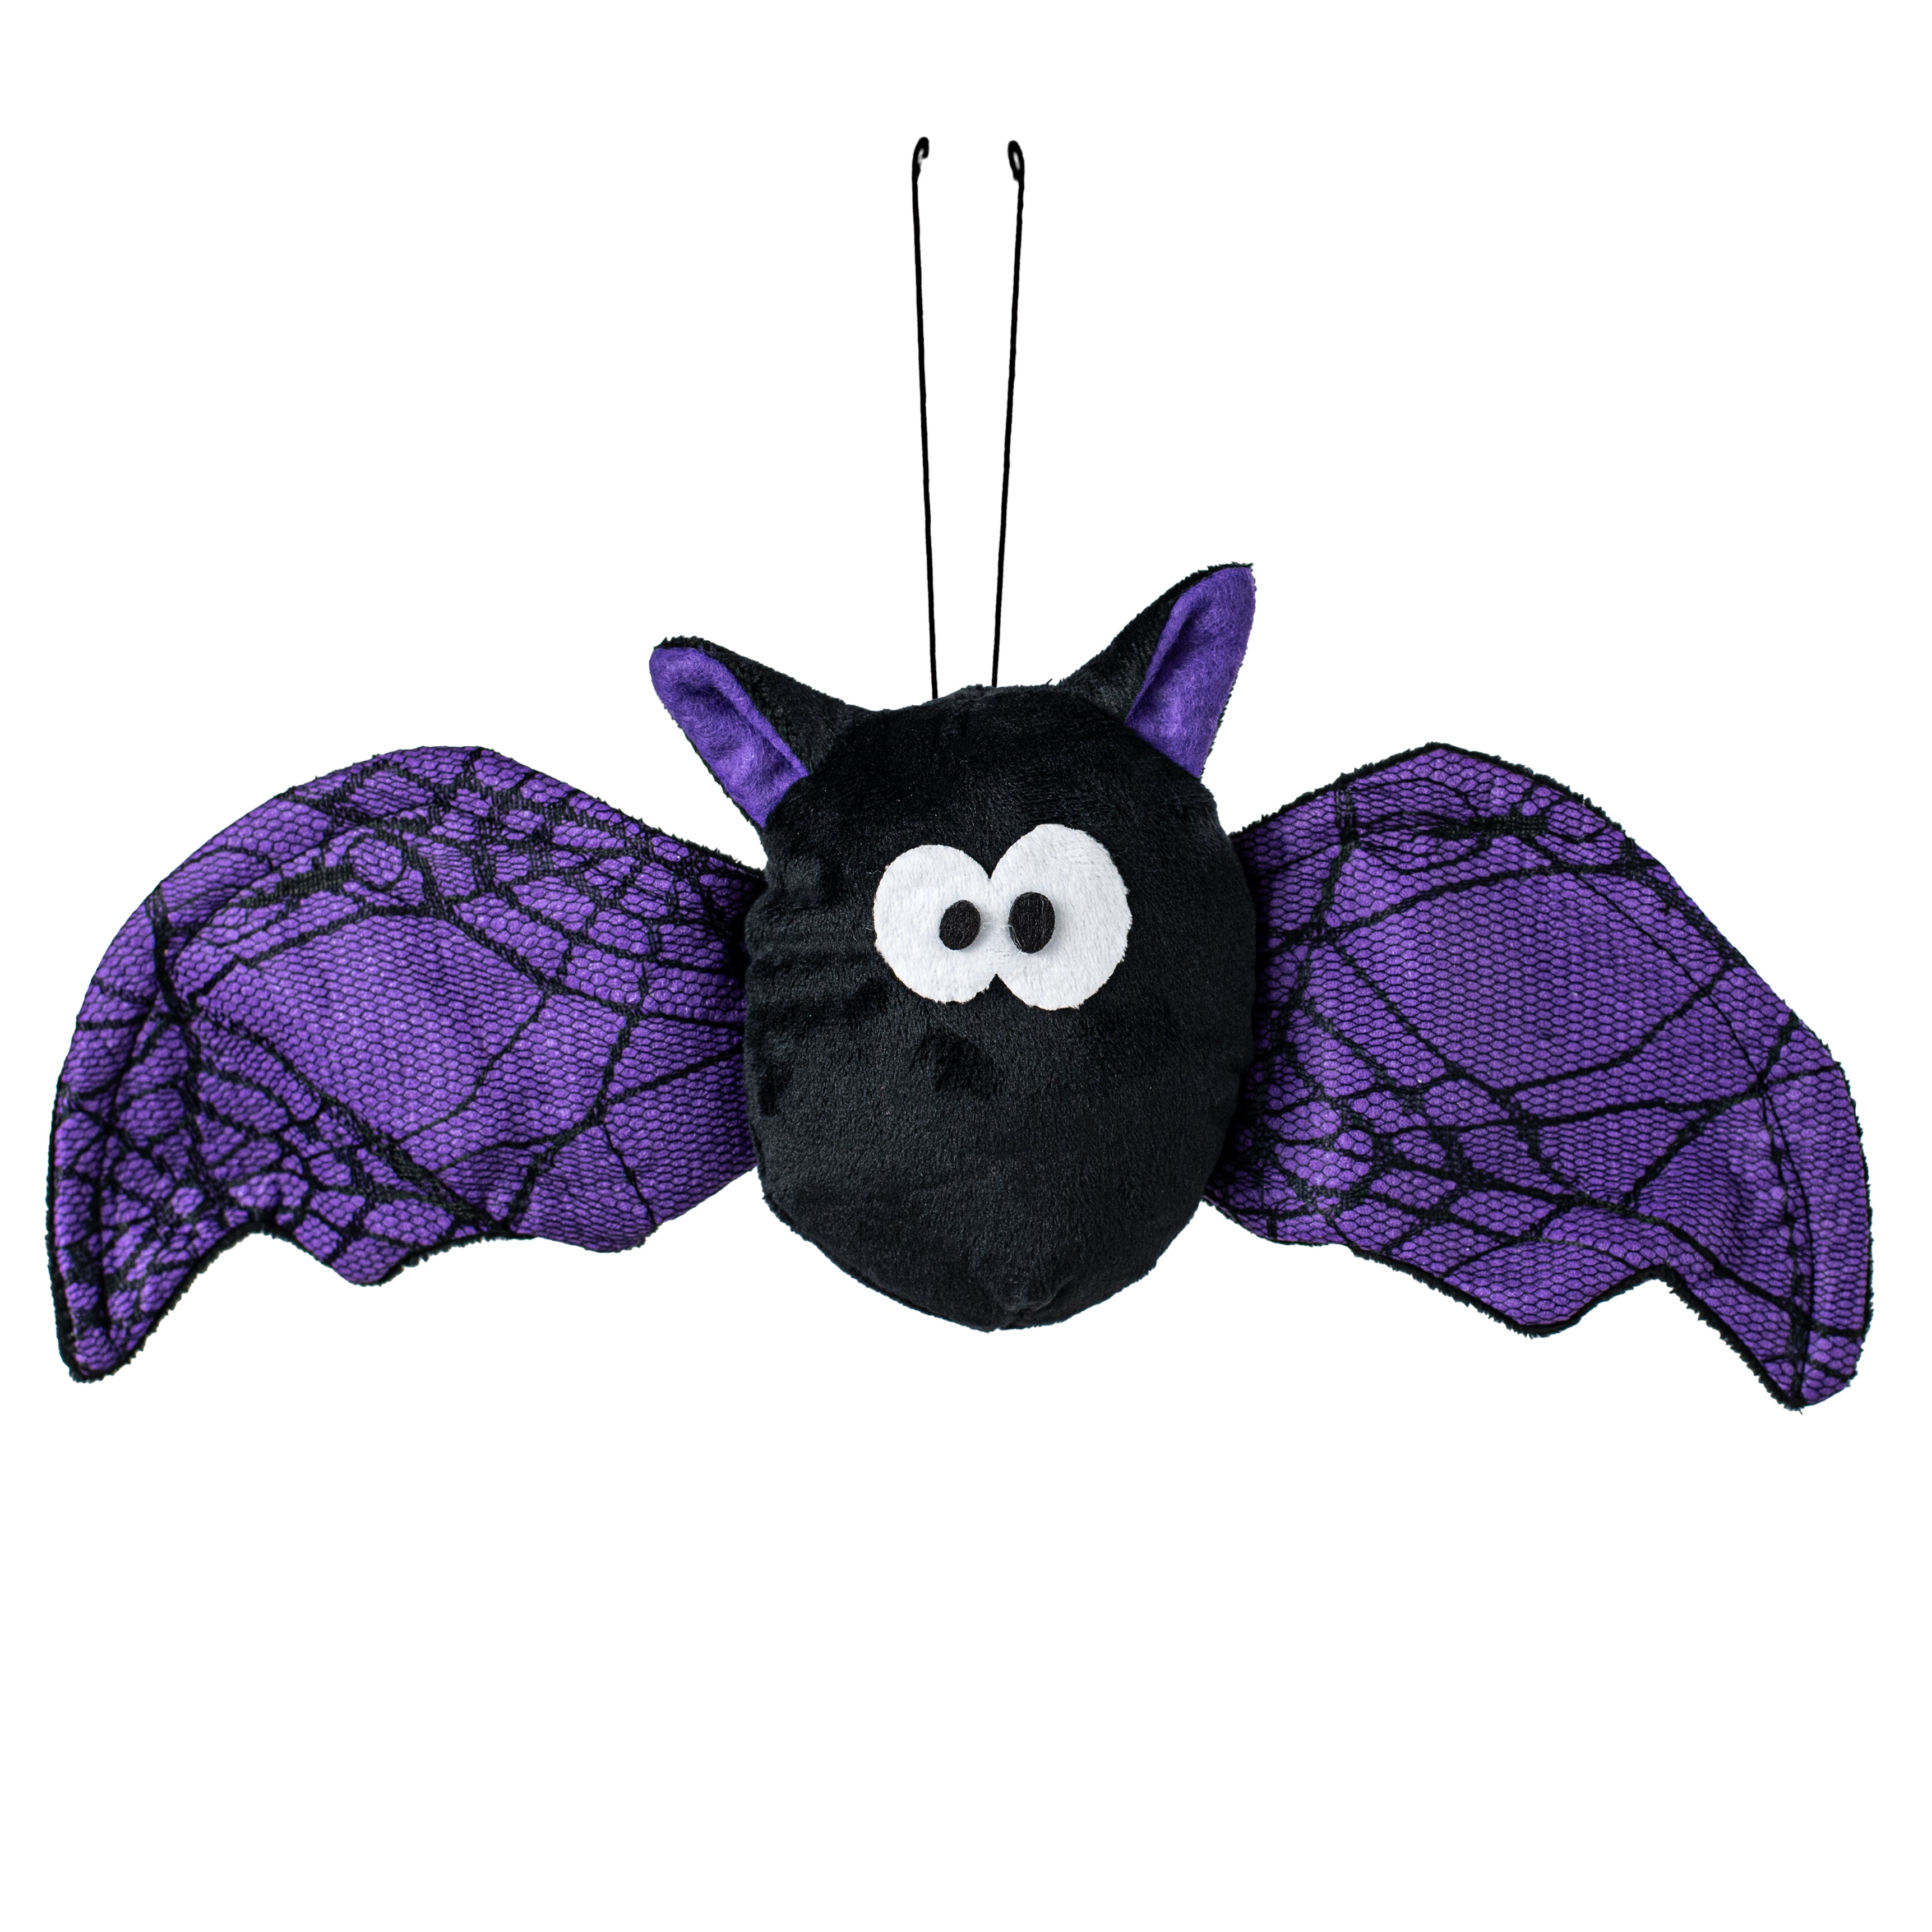 16" Plush Lace Wing Bat: Black & Purple